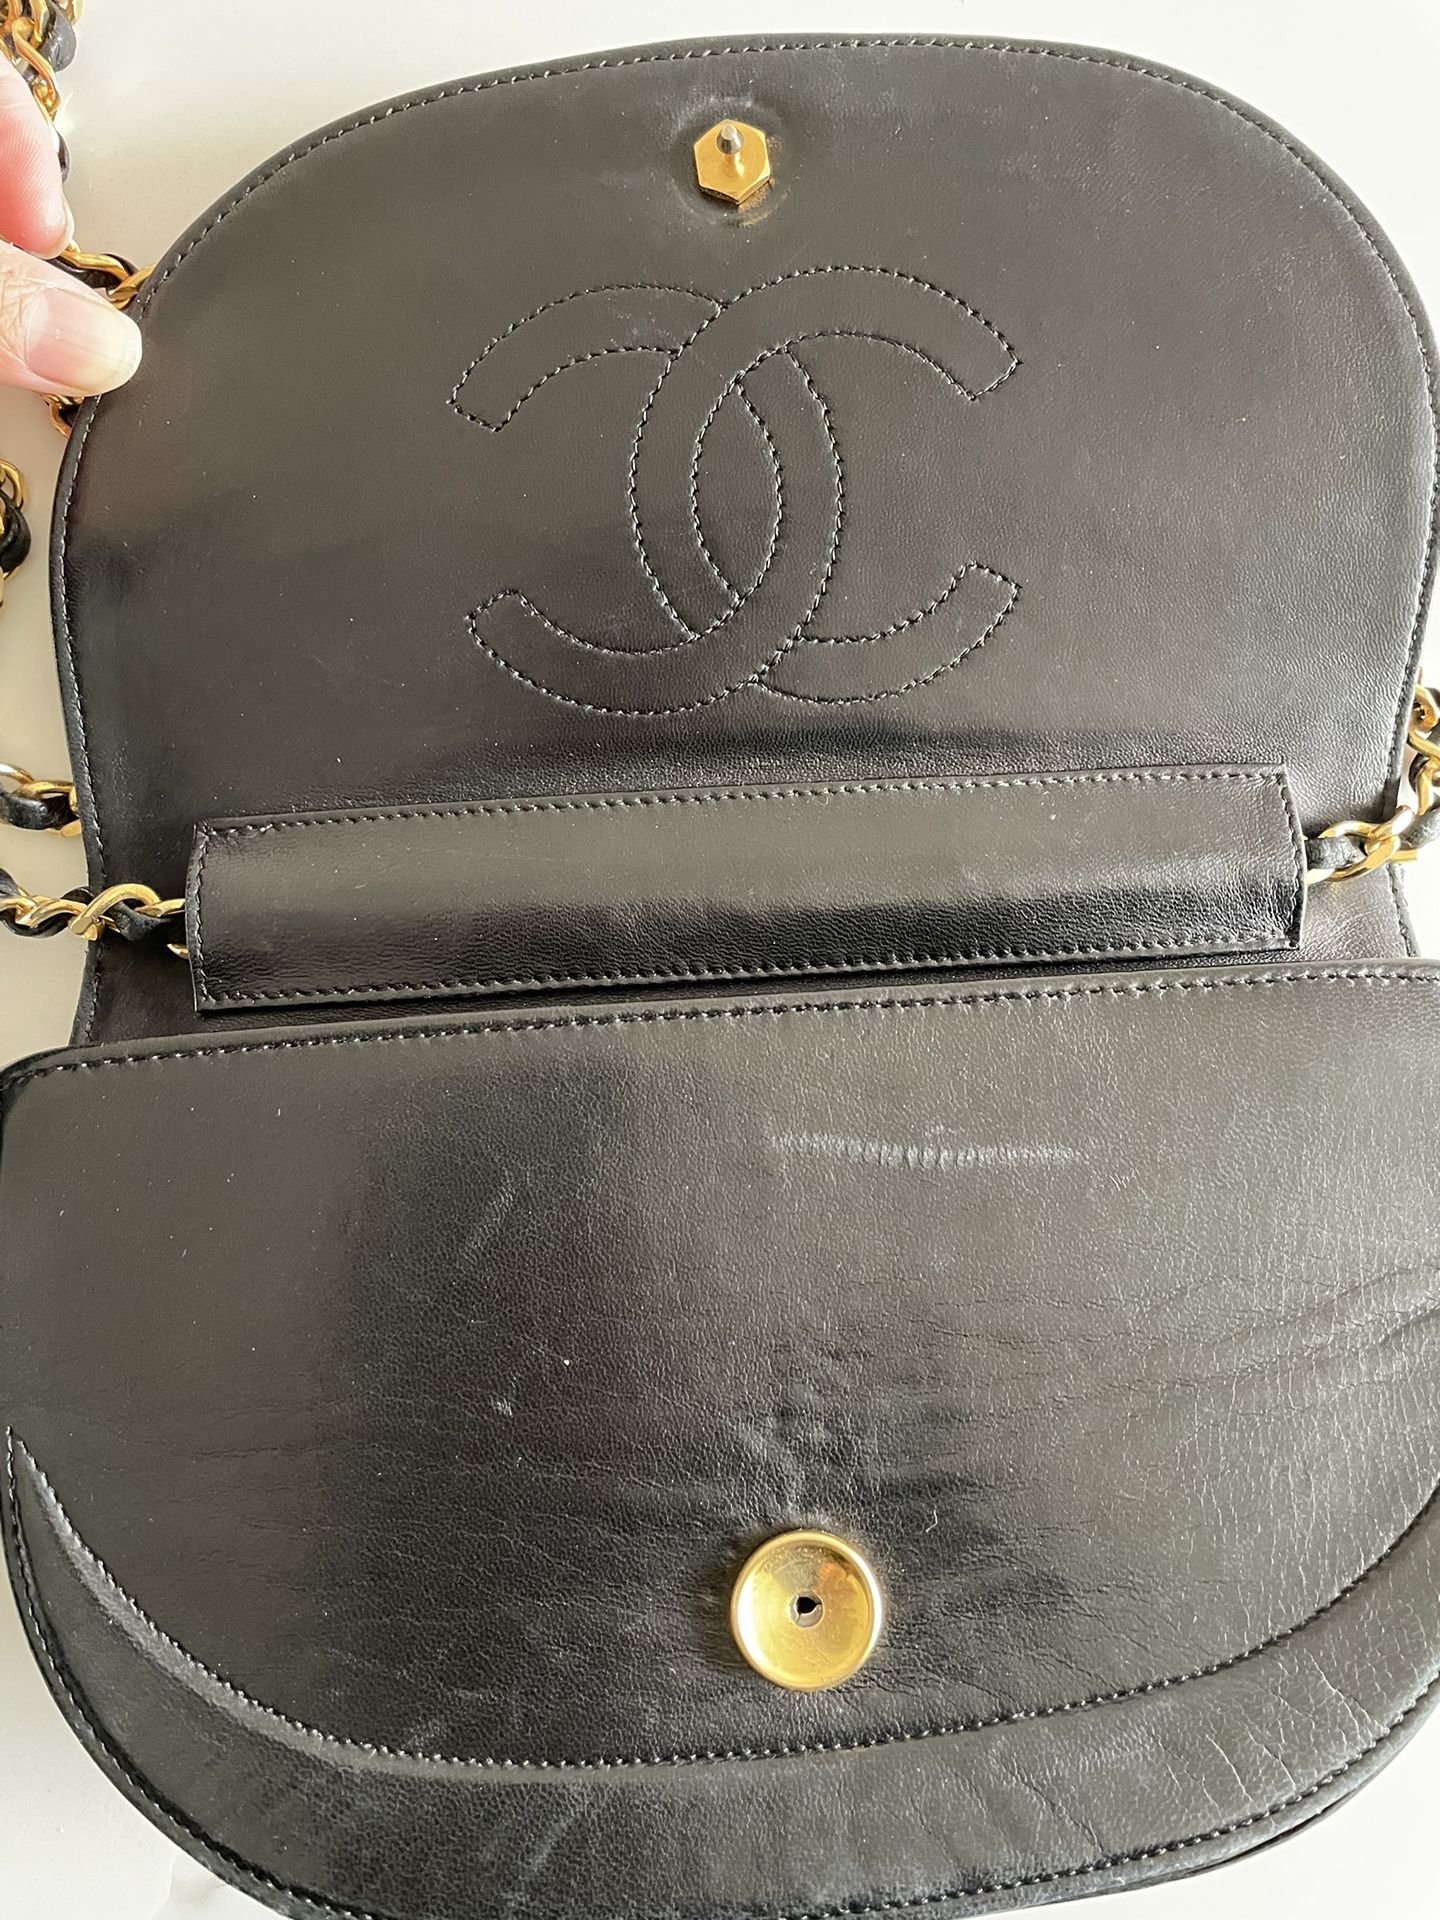 Chanel - Vintage Bag - 24K Gold Alloy Plated for Sale in Scottsdale, AZ -  OfferUp